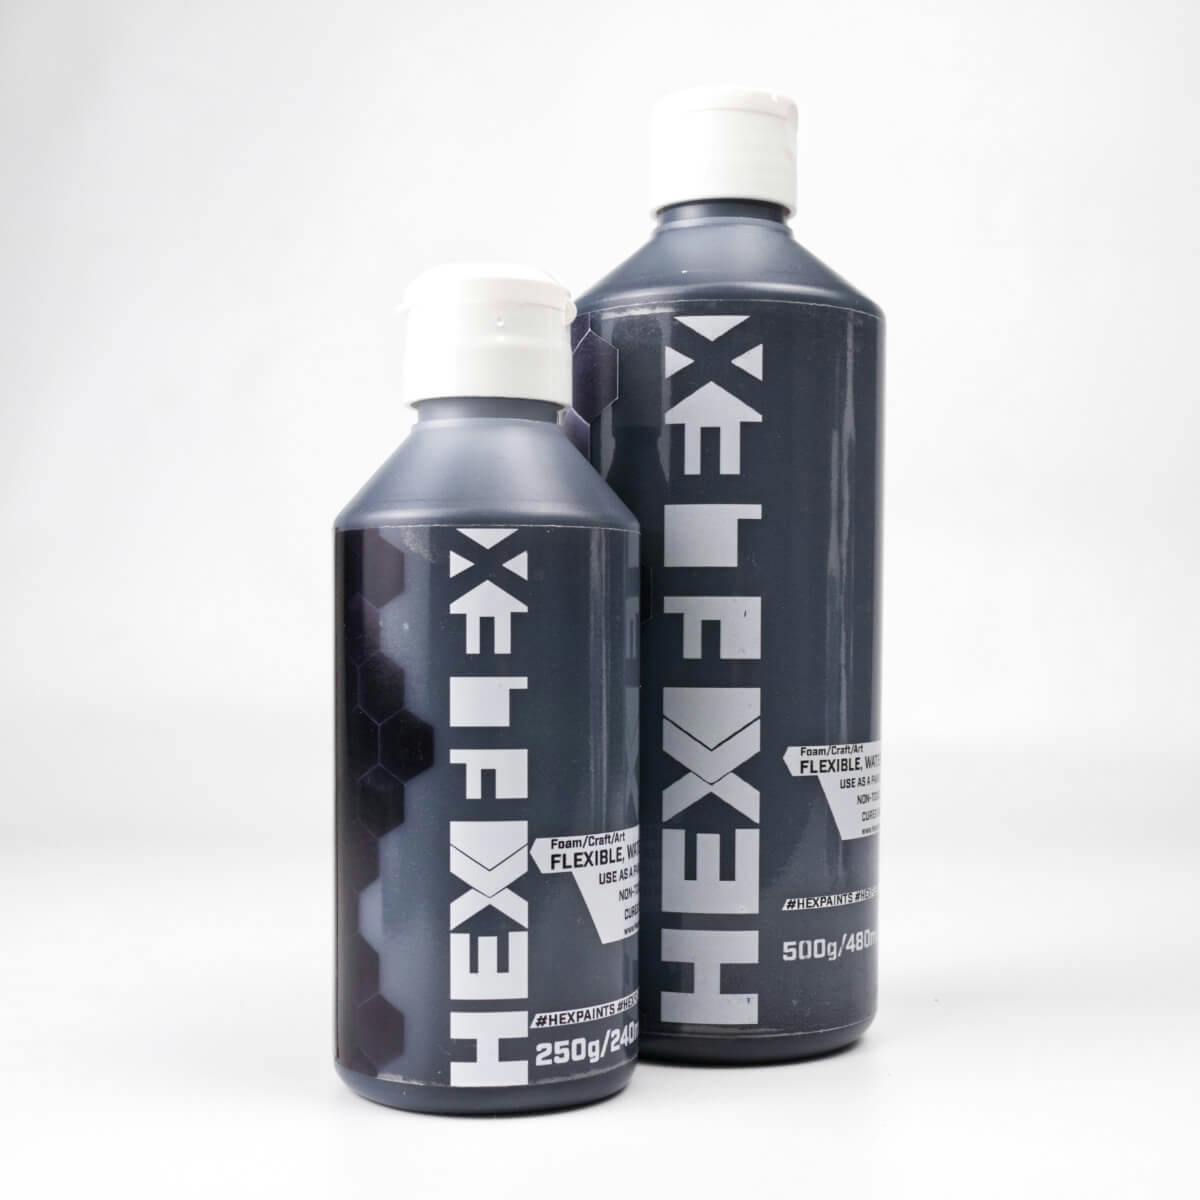 Product HexFlex Primer in black